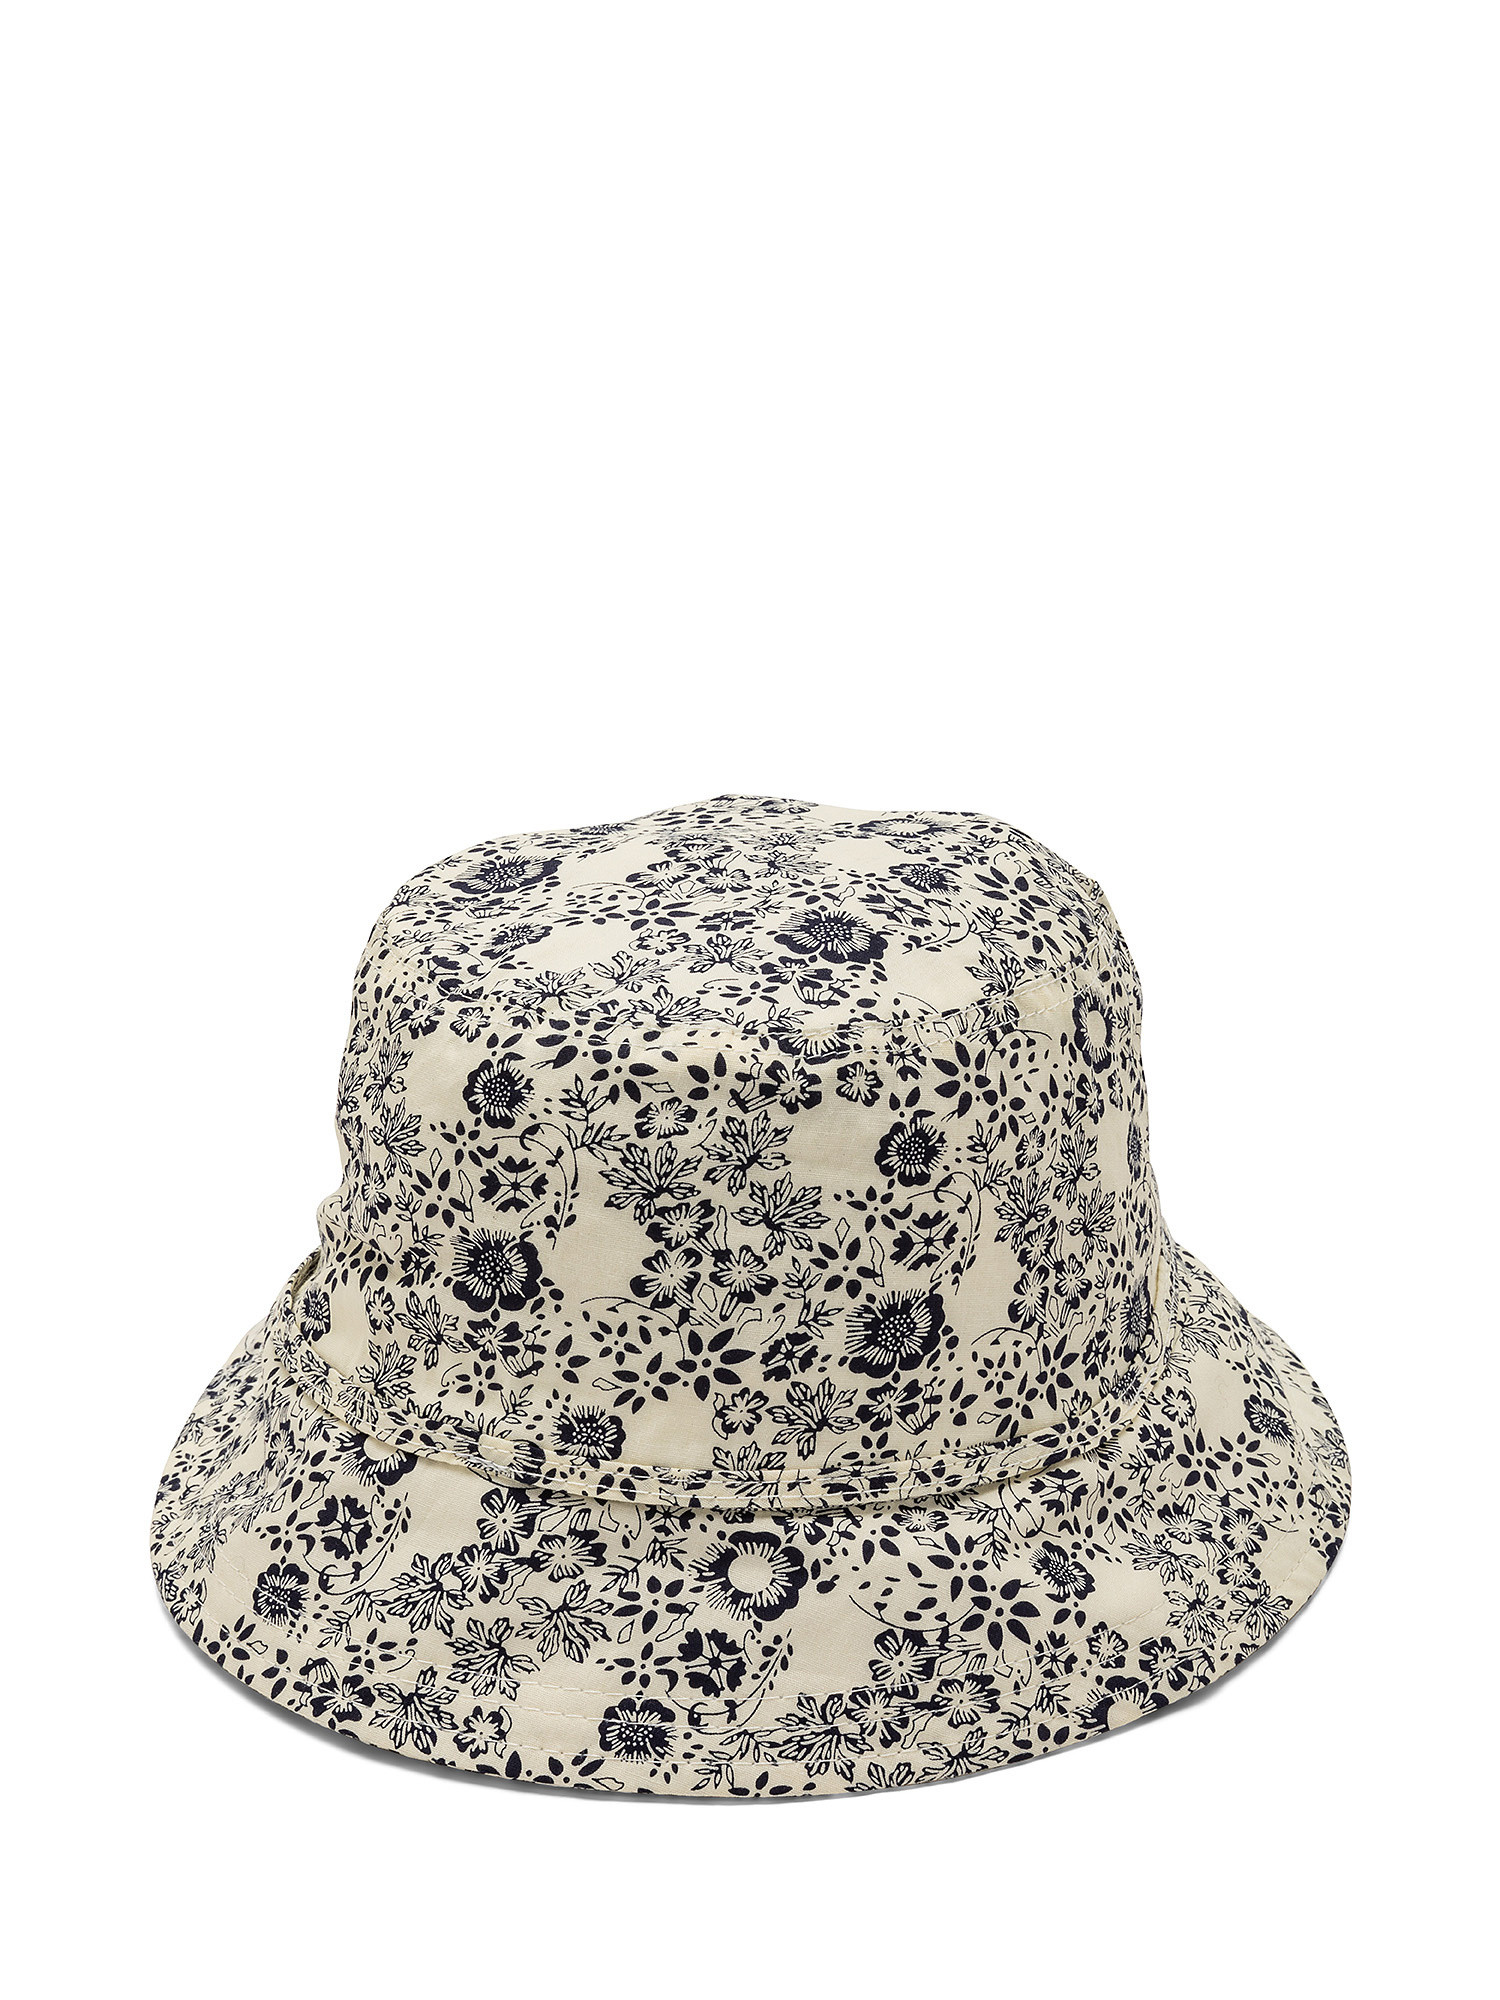 Cappello cotone stampa a fiori, Bianco, large image number 0